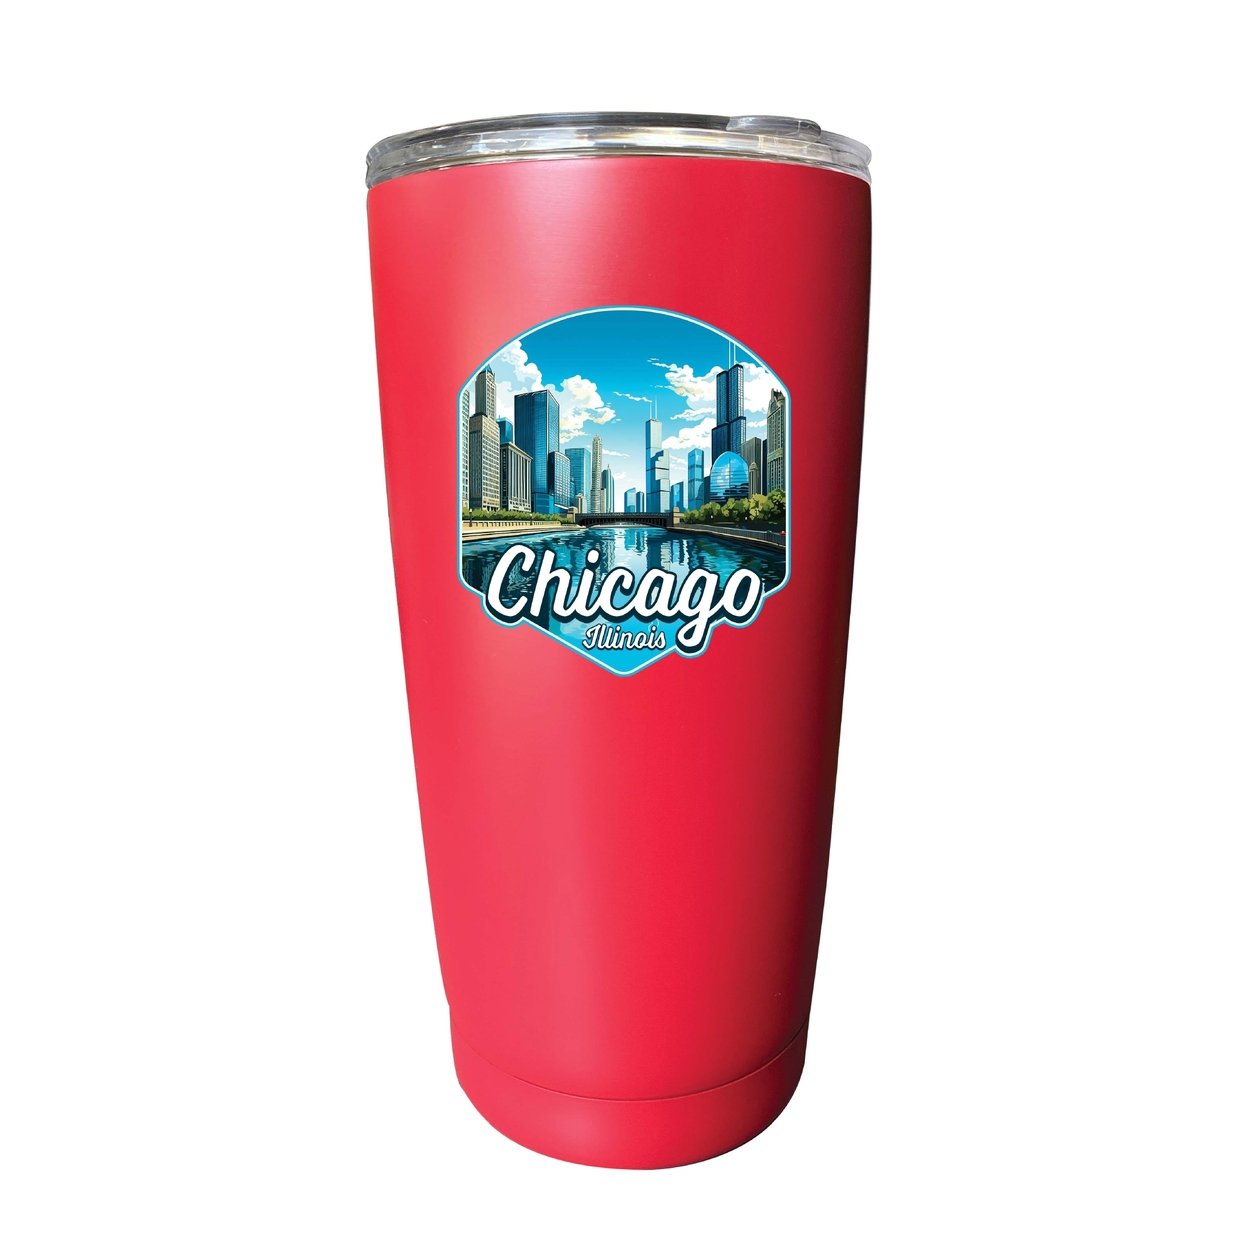 Chicago Illinois A Souvenir 16 Oz Insulated Tumbler - Red,,Single